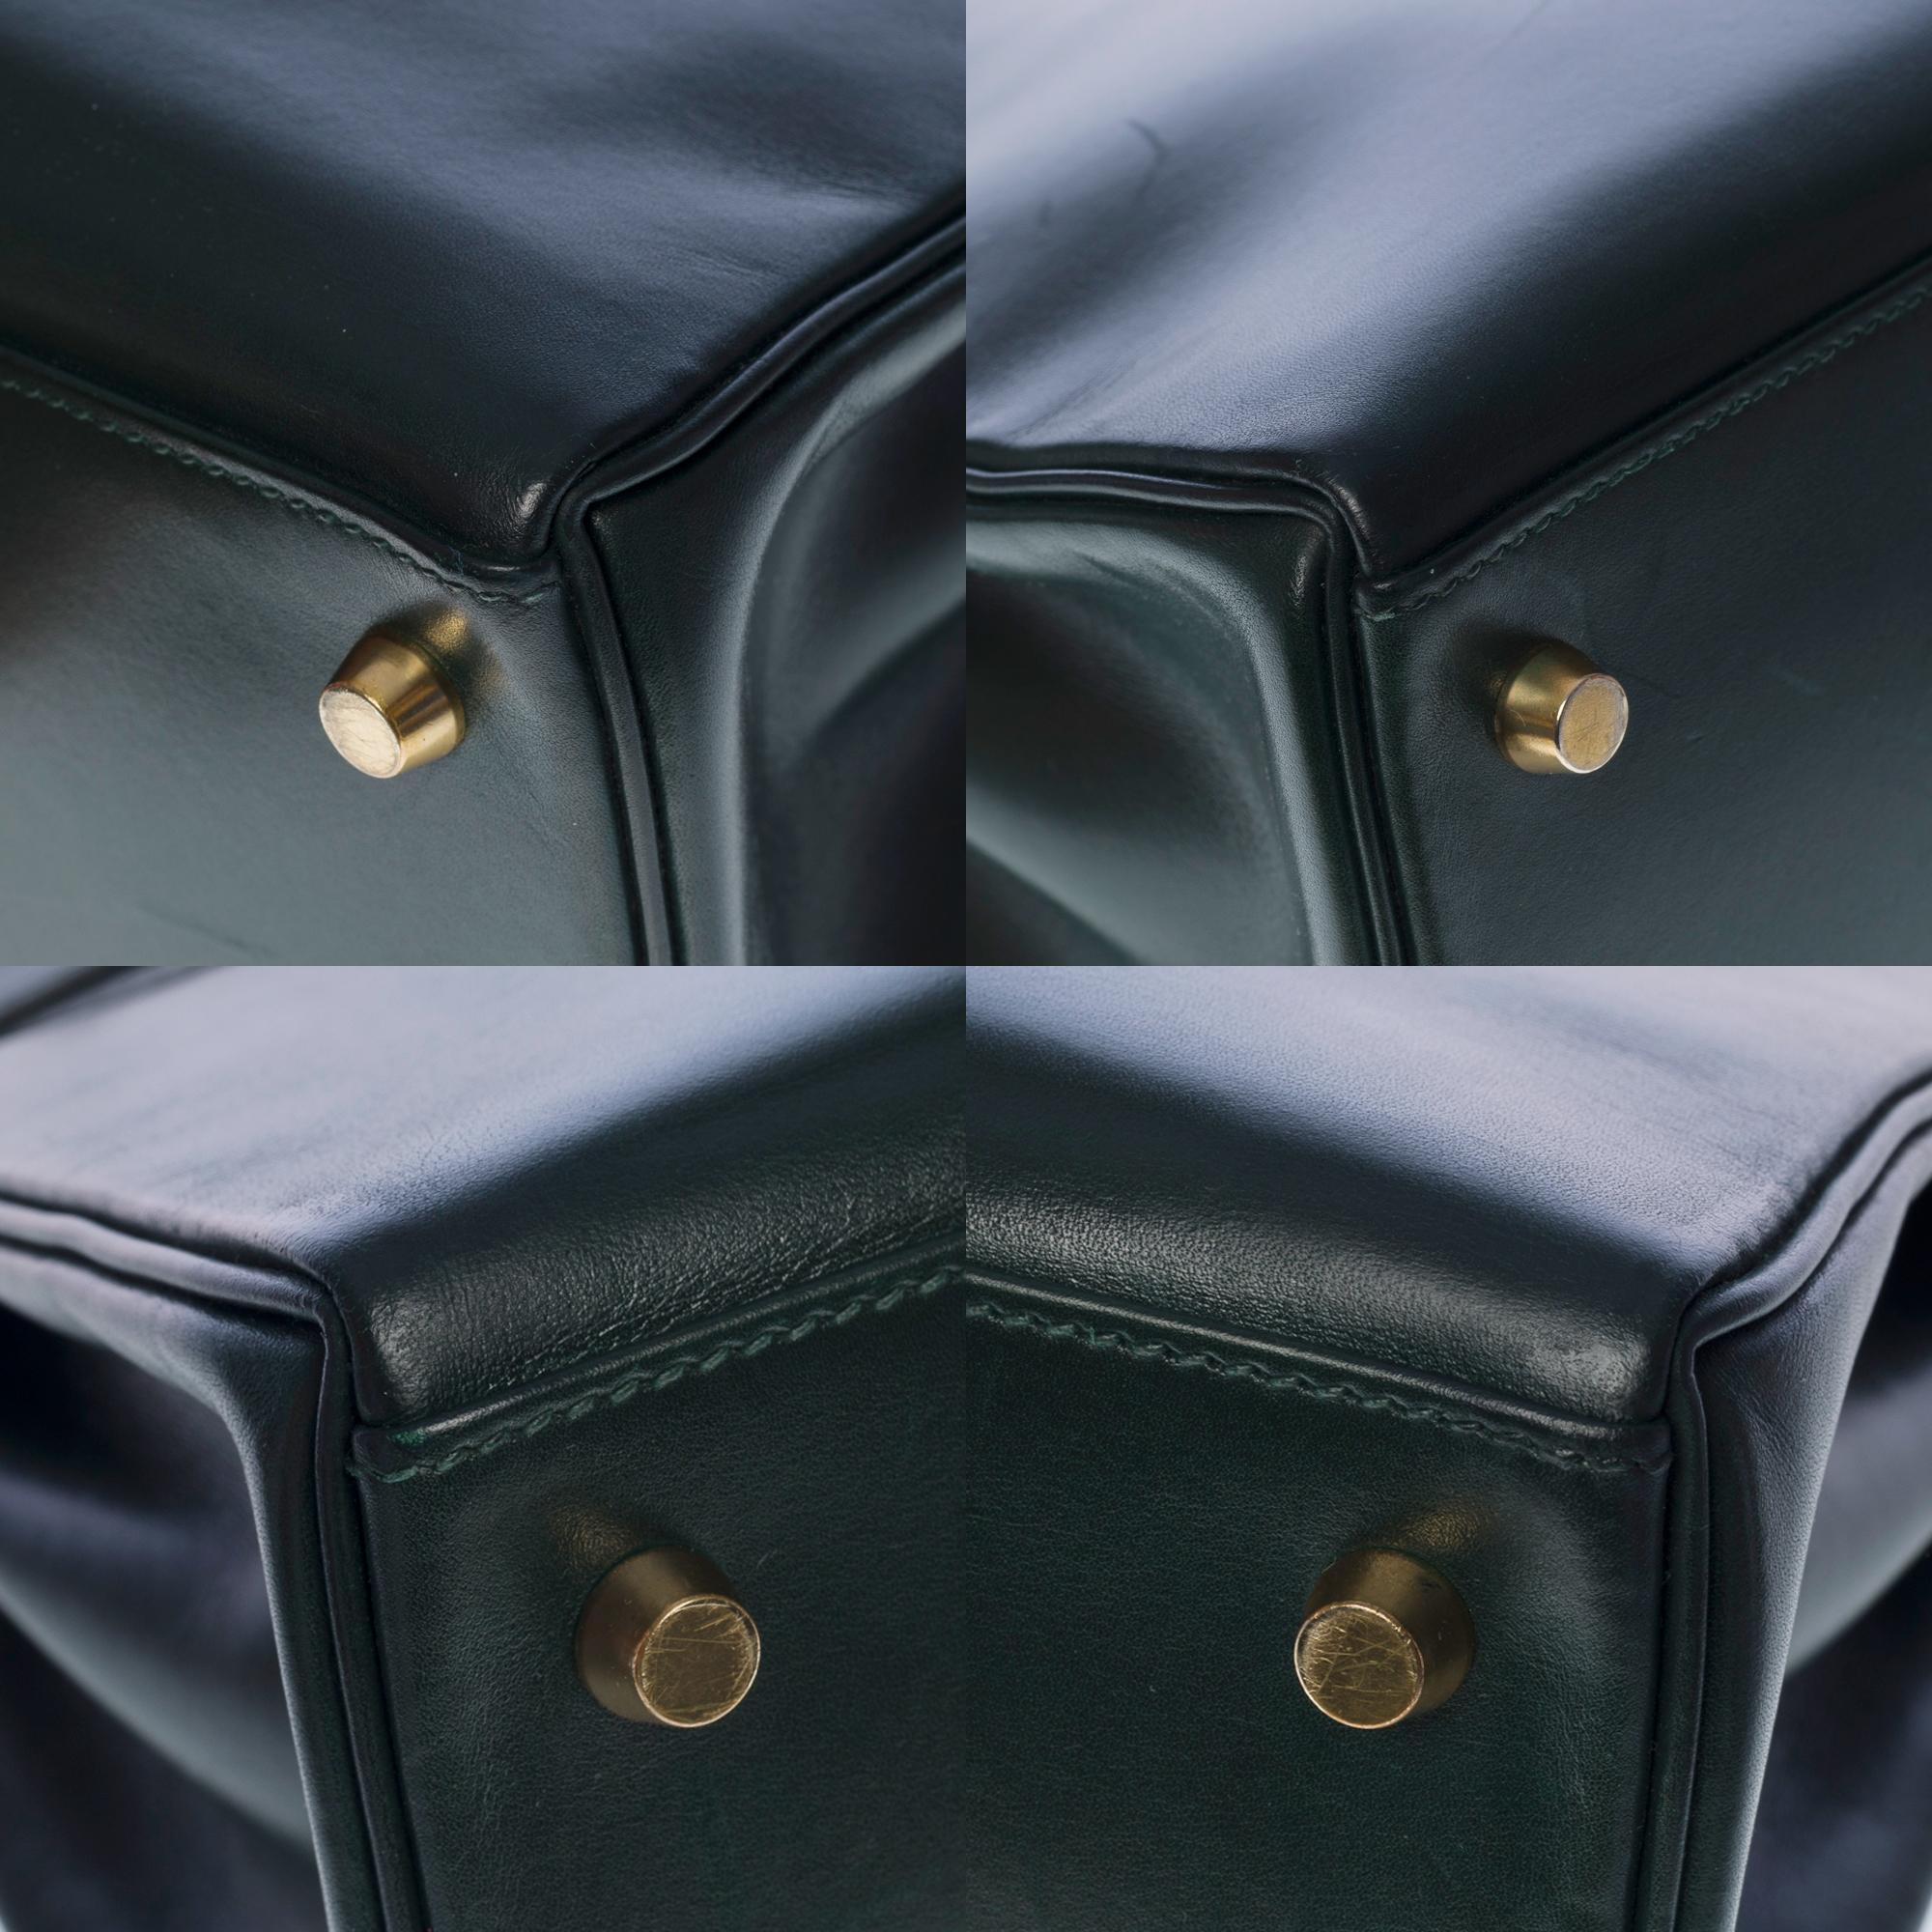 Rare Hermès Kelly 28 retourne handbag strap in green box calf leather, GHW 6